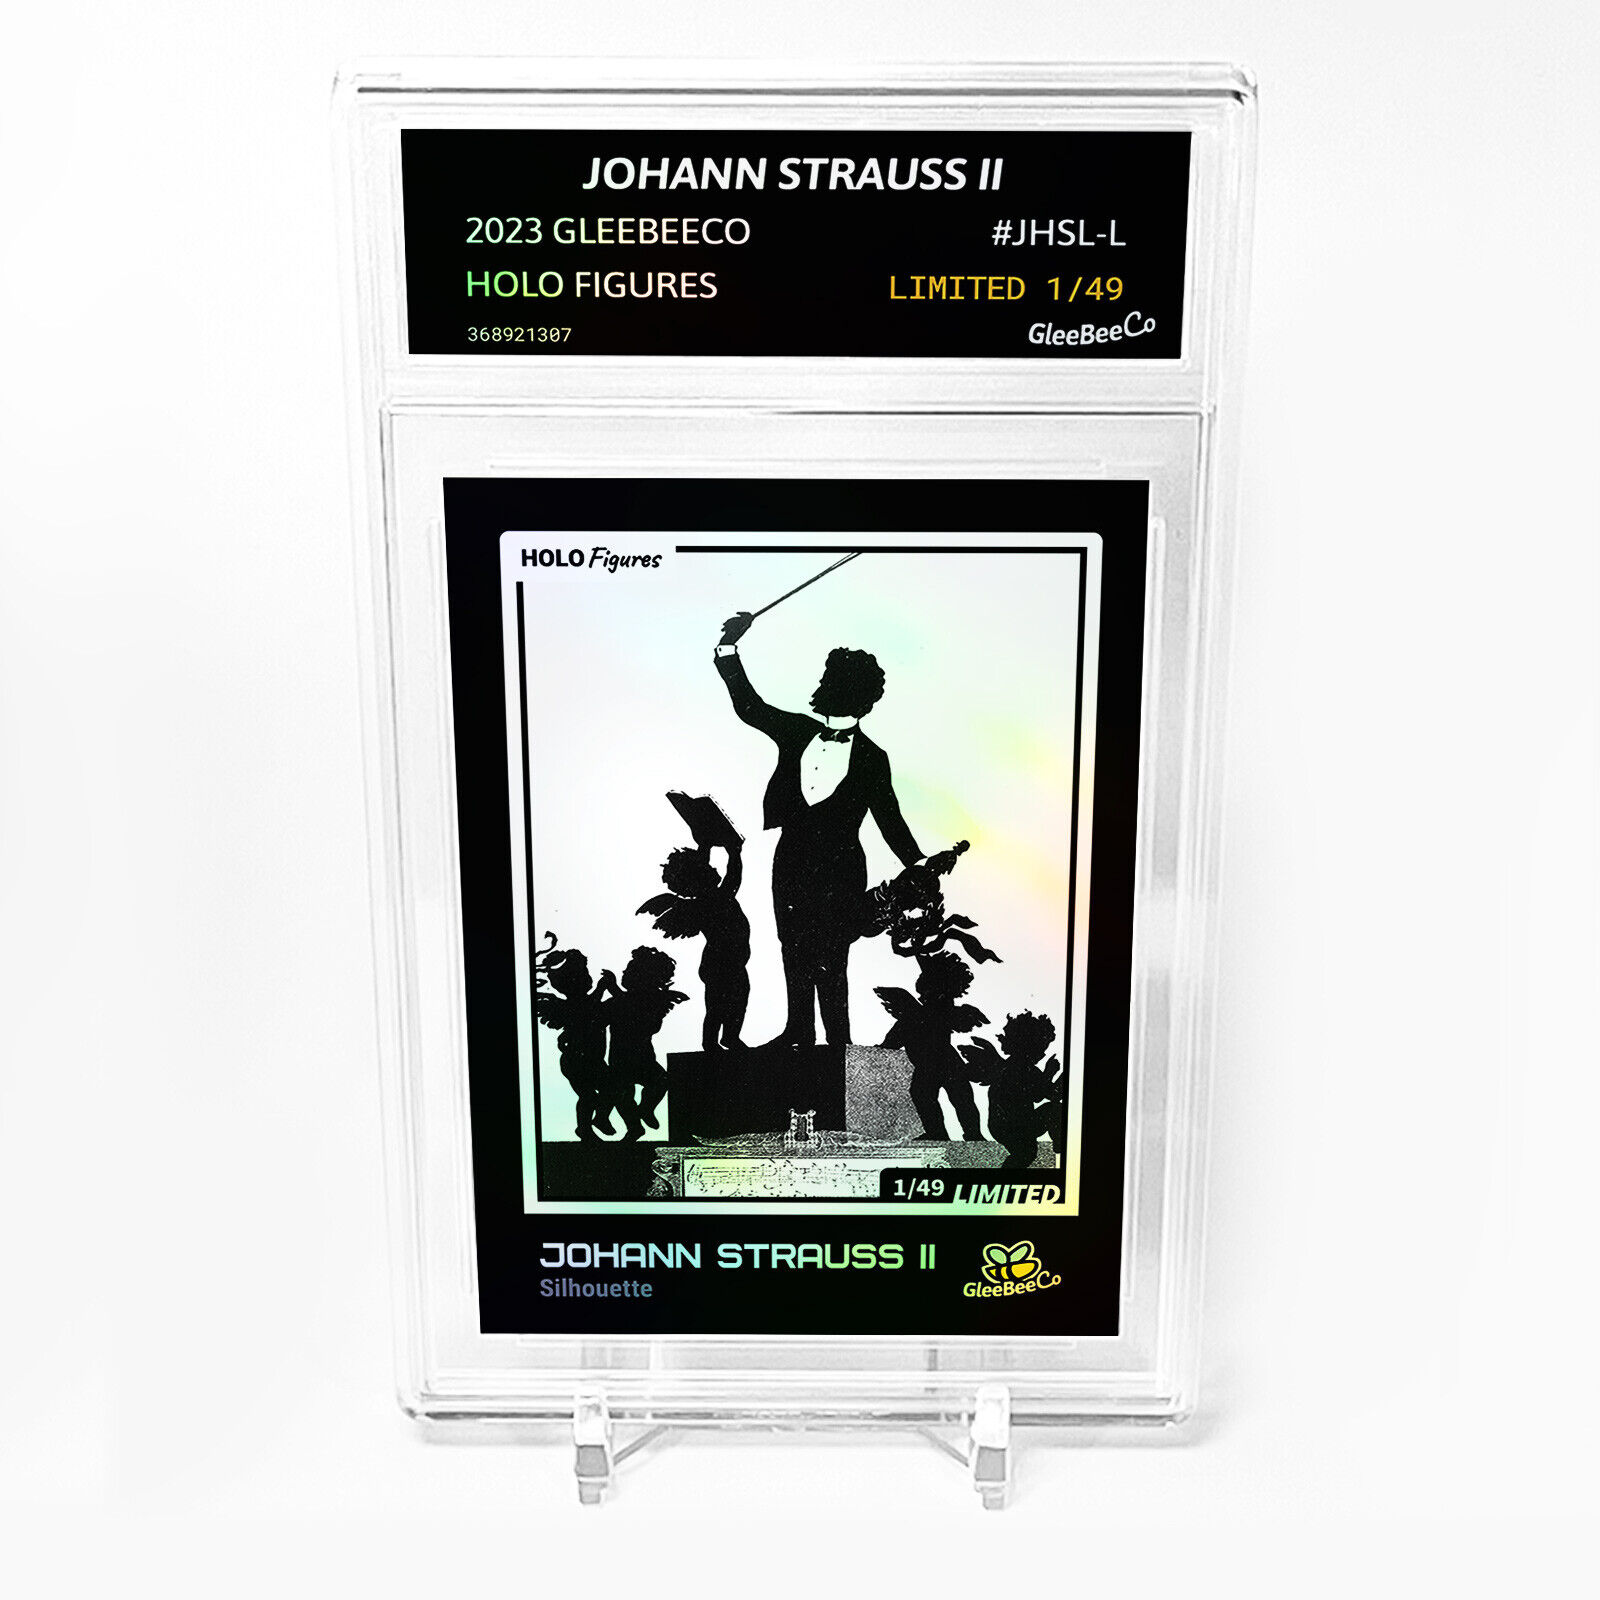 JOHANN STRAUSS II Card 2023 GleeBeeCo Silhouette Holo #JHSL-L /49 STUNNING